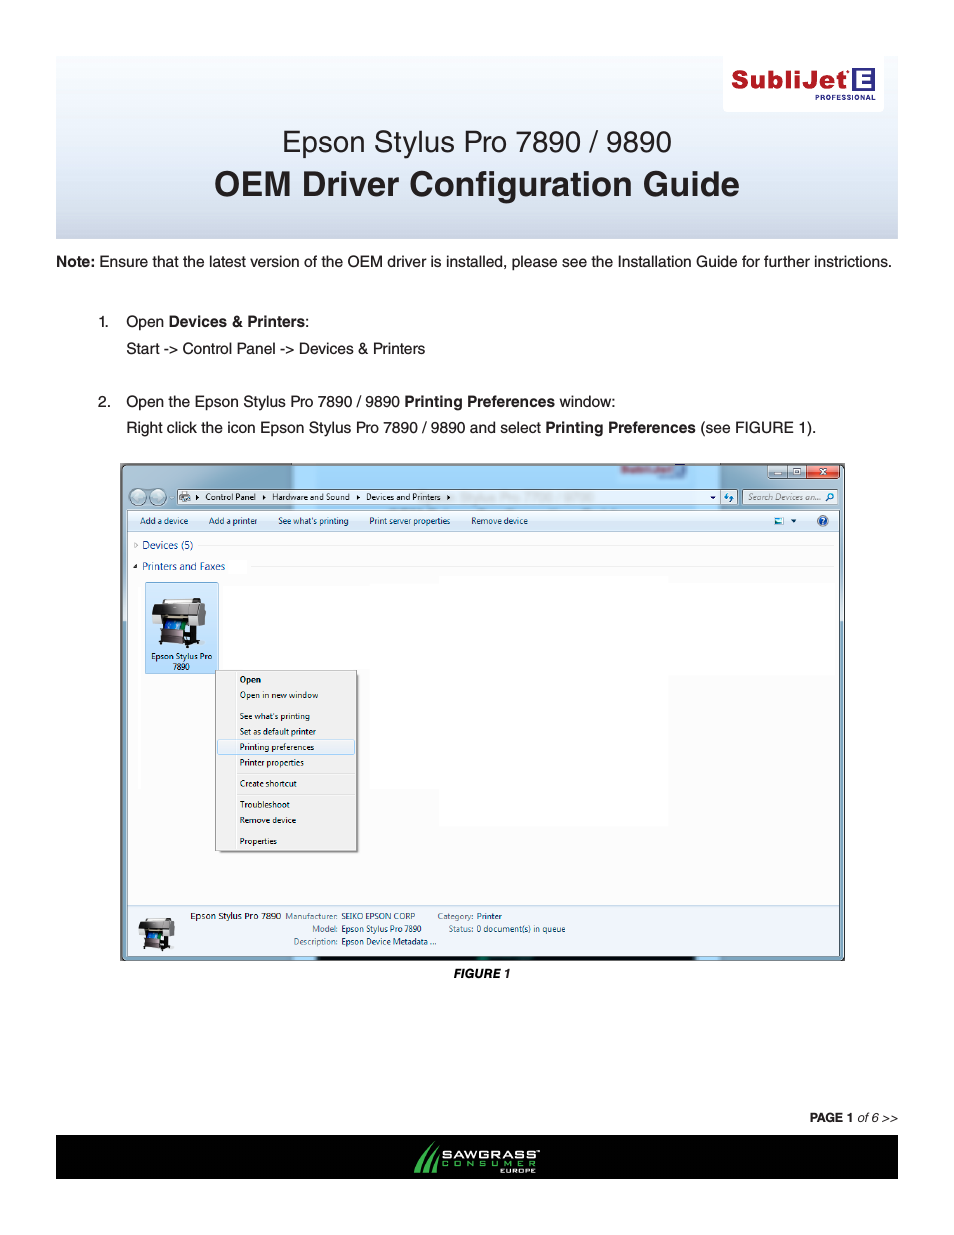 SubliJet E Epson Stylus Pro 7890 (Windows ICC Profile Setup): Driver Configuration Guide